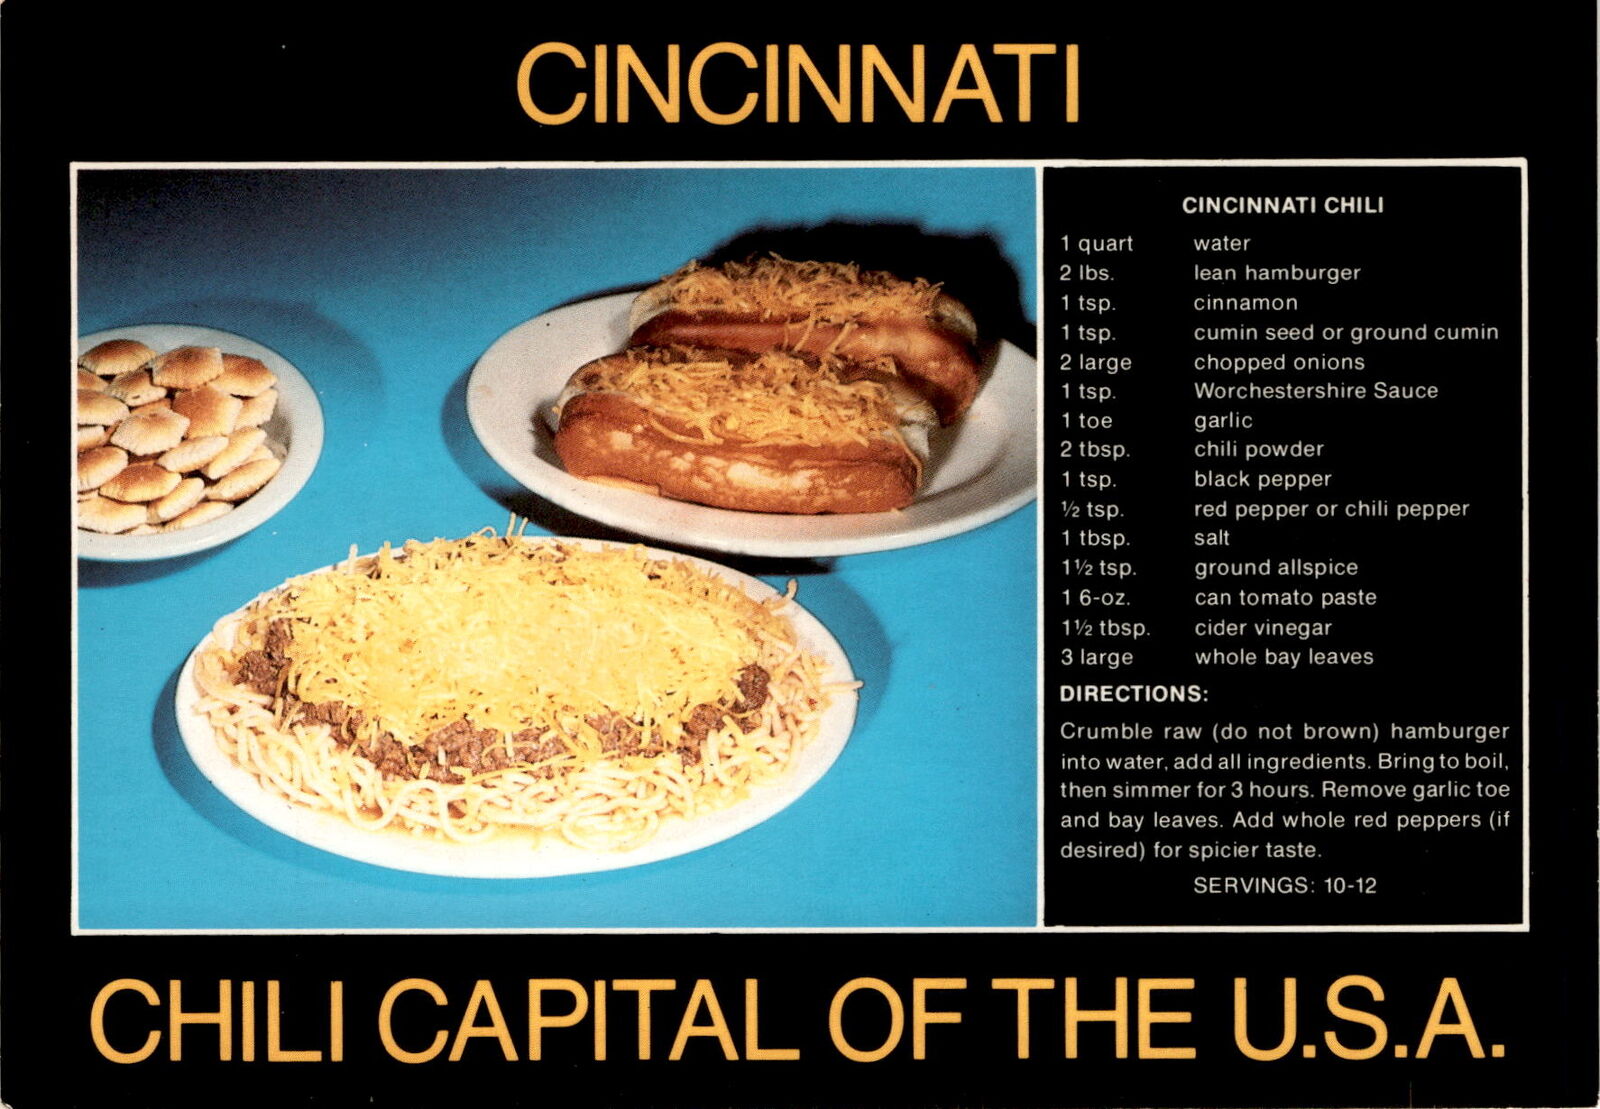 Cincinnati Ohio Chili 2way 3way 4way 5way Coneys spaghetti cheese o postcard